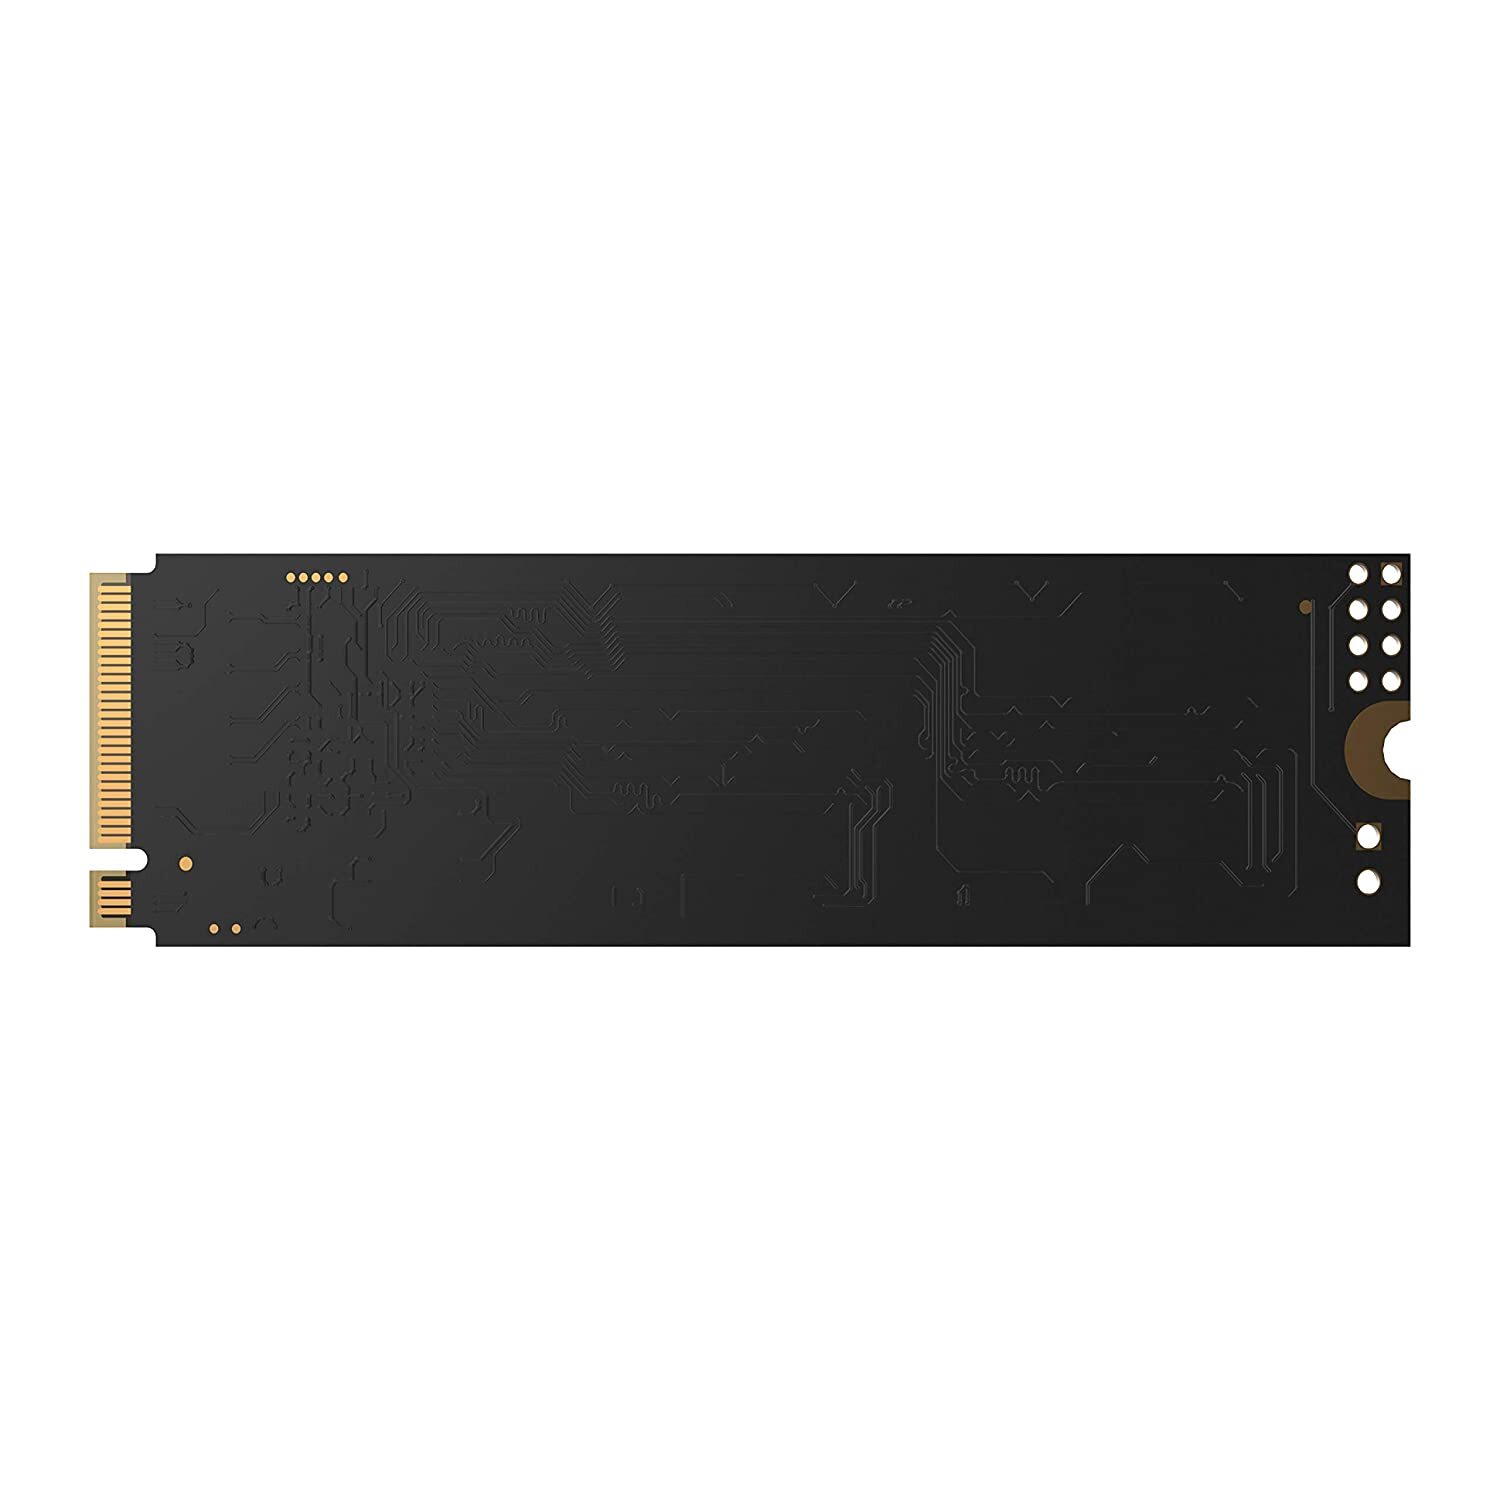 HP EX900 M.2 250GB PCIe 3.1 x 4 NVMe 3D TLC NAND Internal Solid State Drive (SSD) Max 2100 MBps (2YY43AA#ABC)